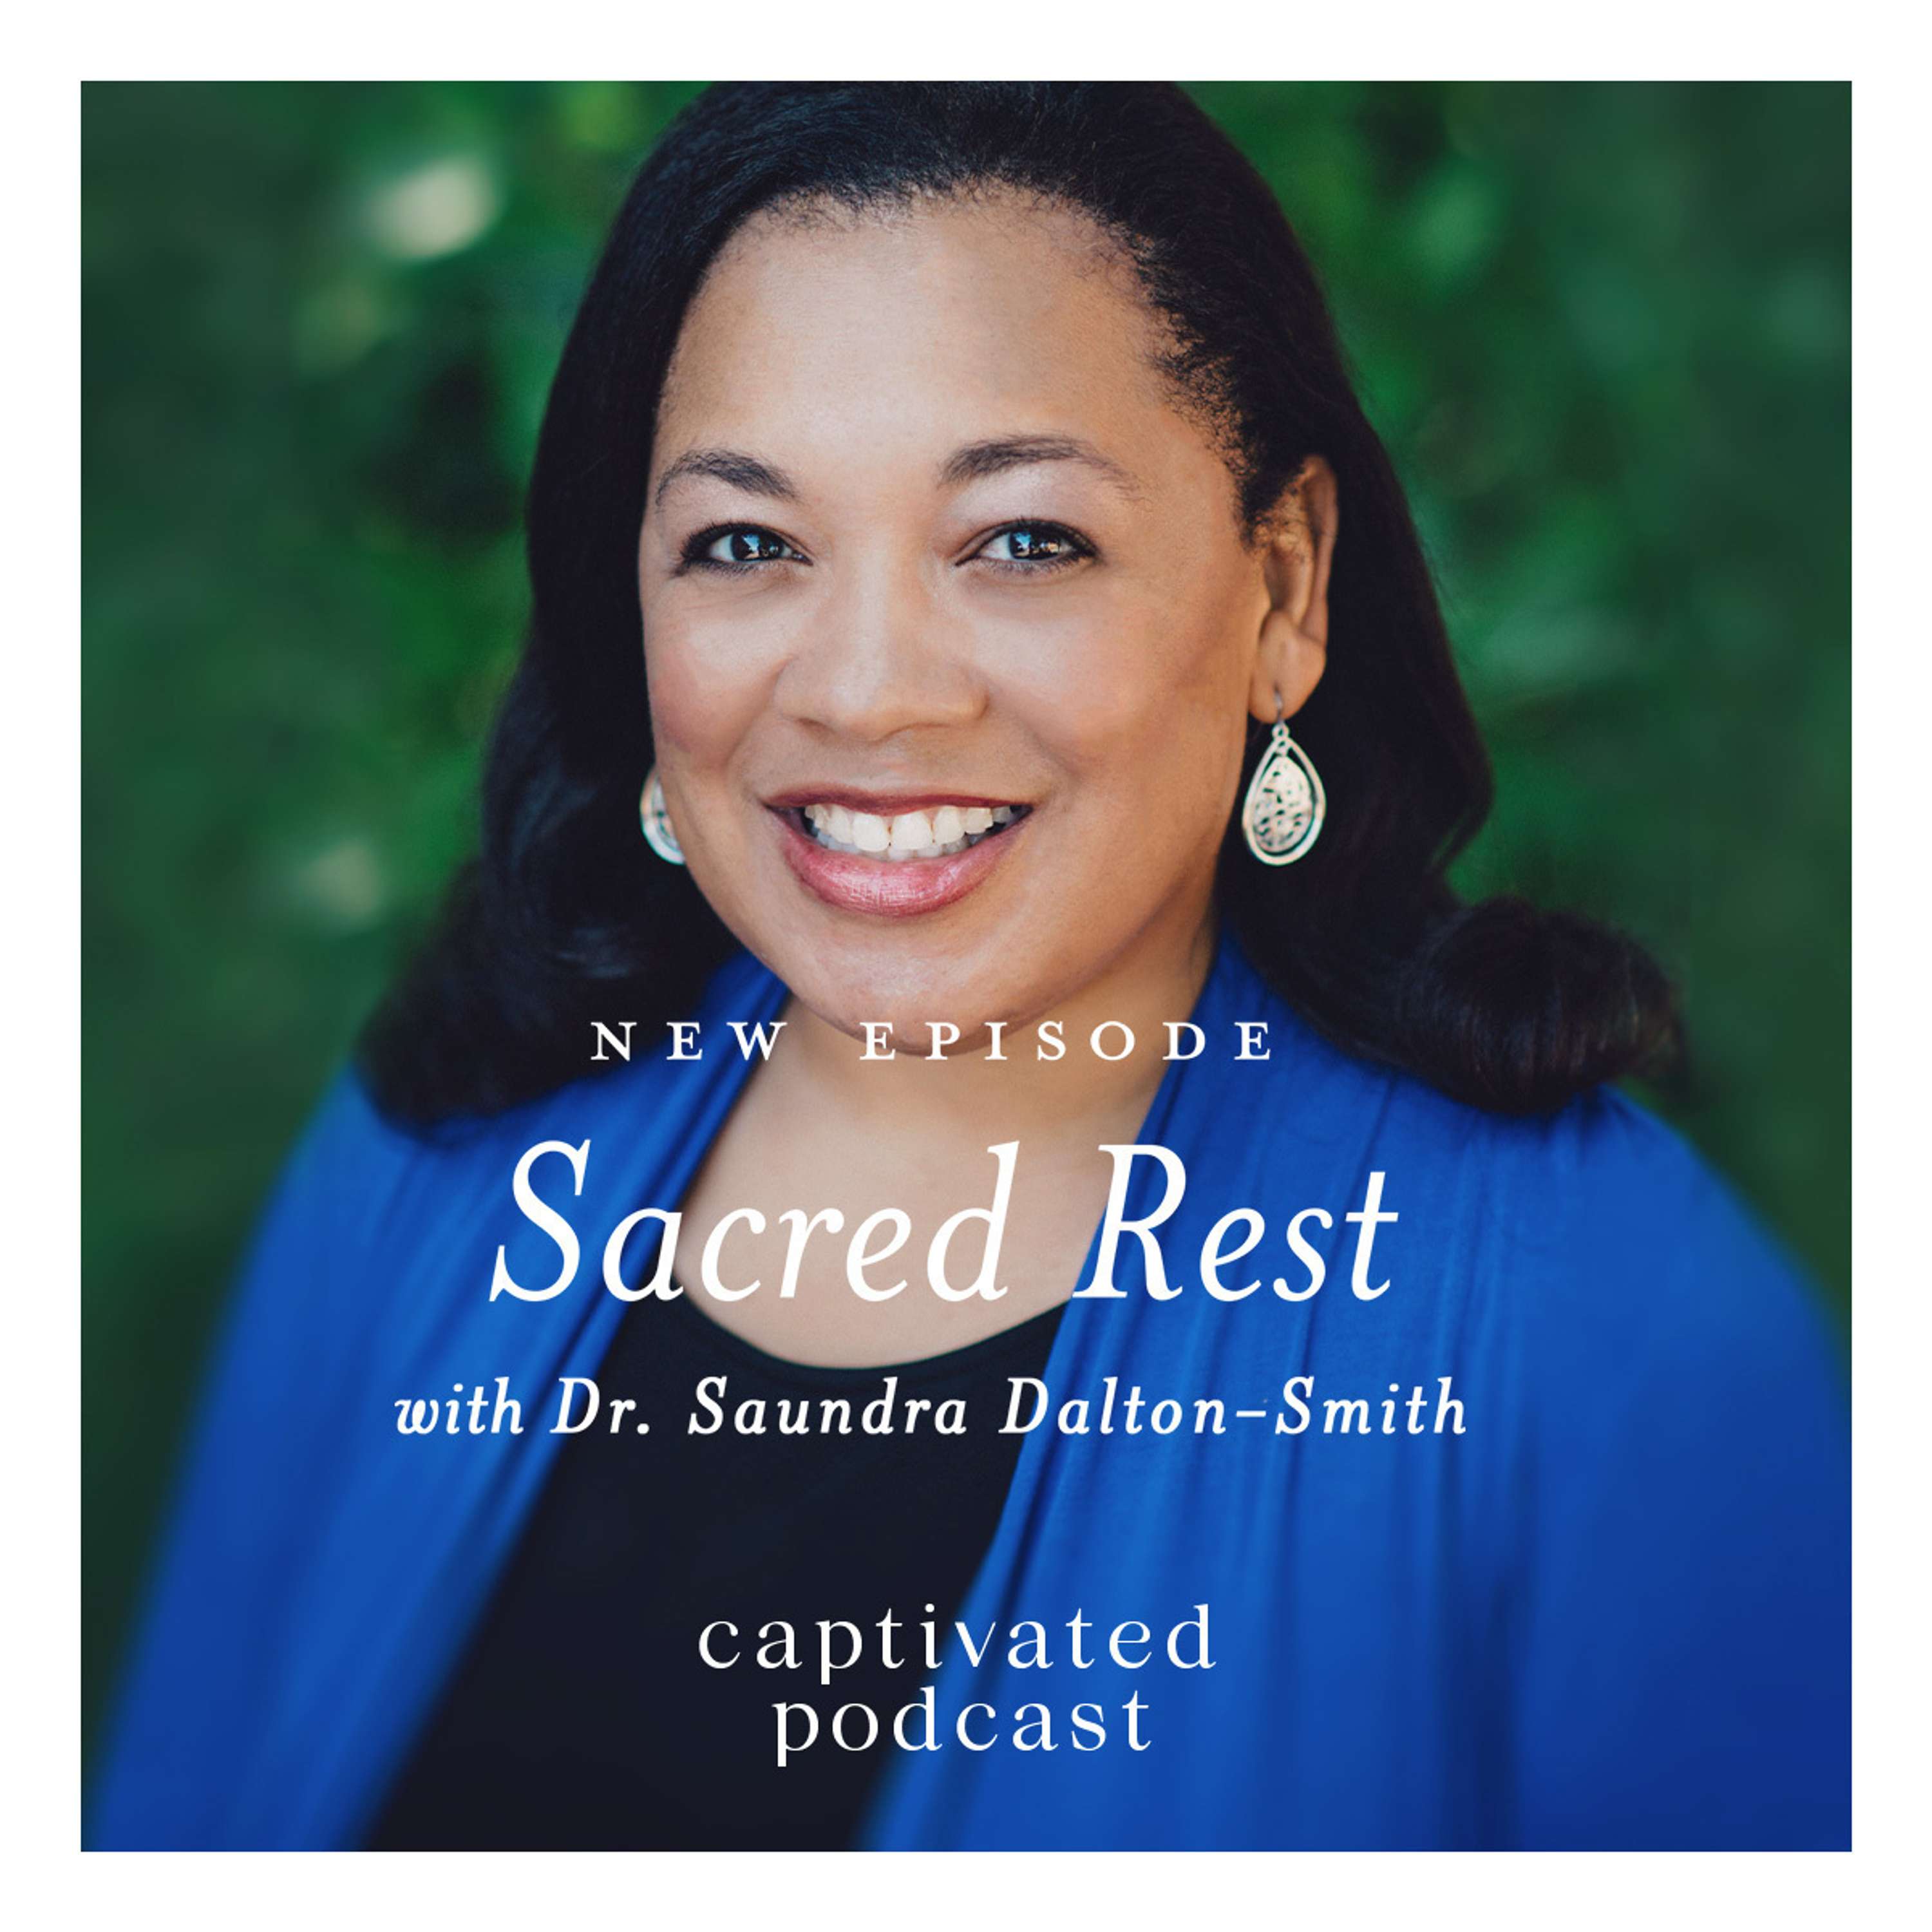 Sacred Rest with Dr. Saundra Dalton-Smith